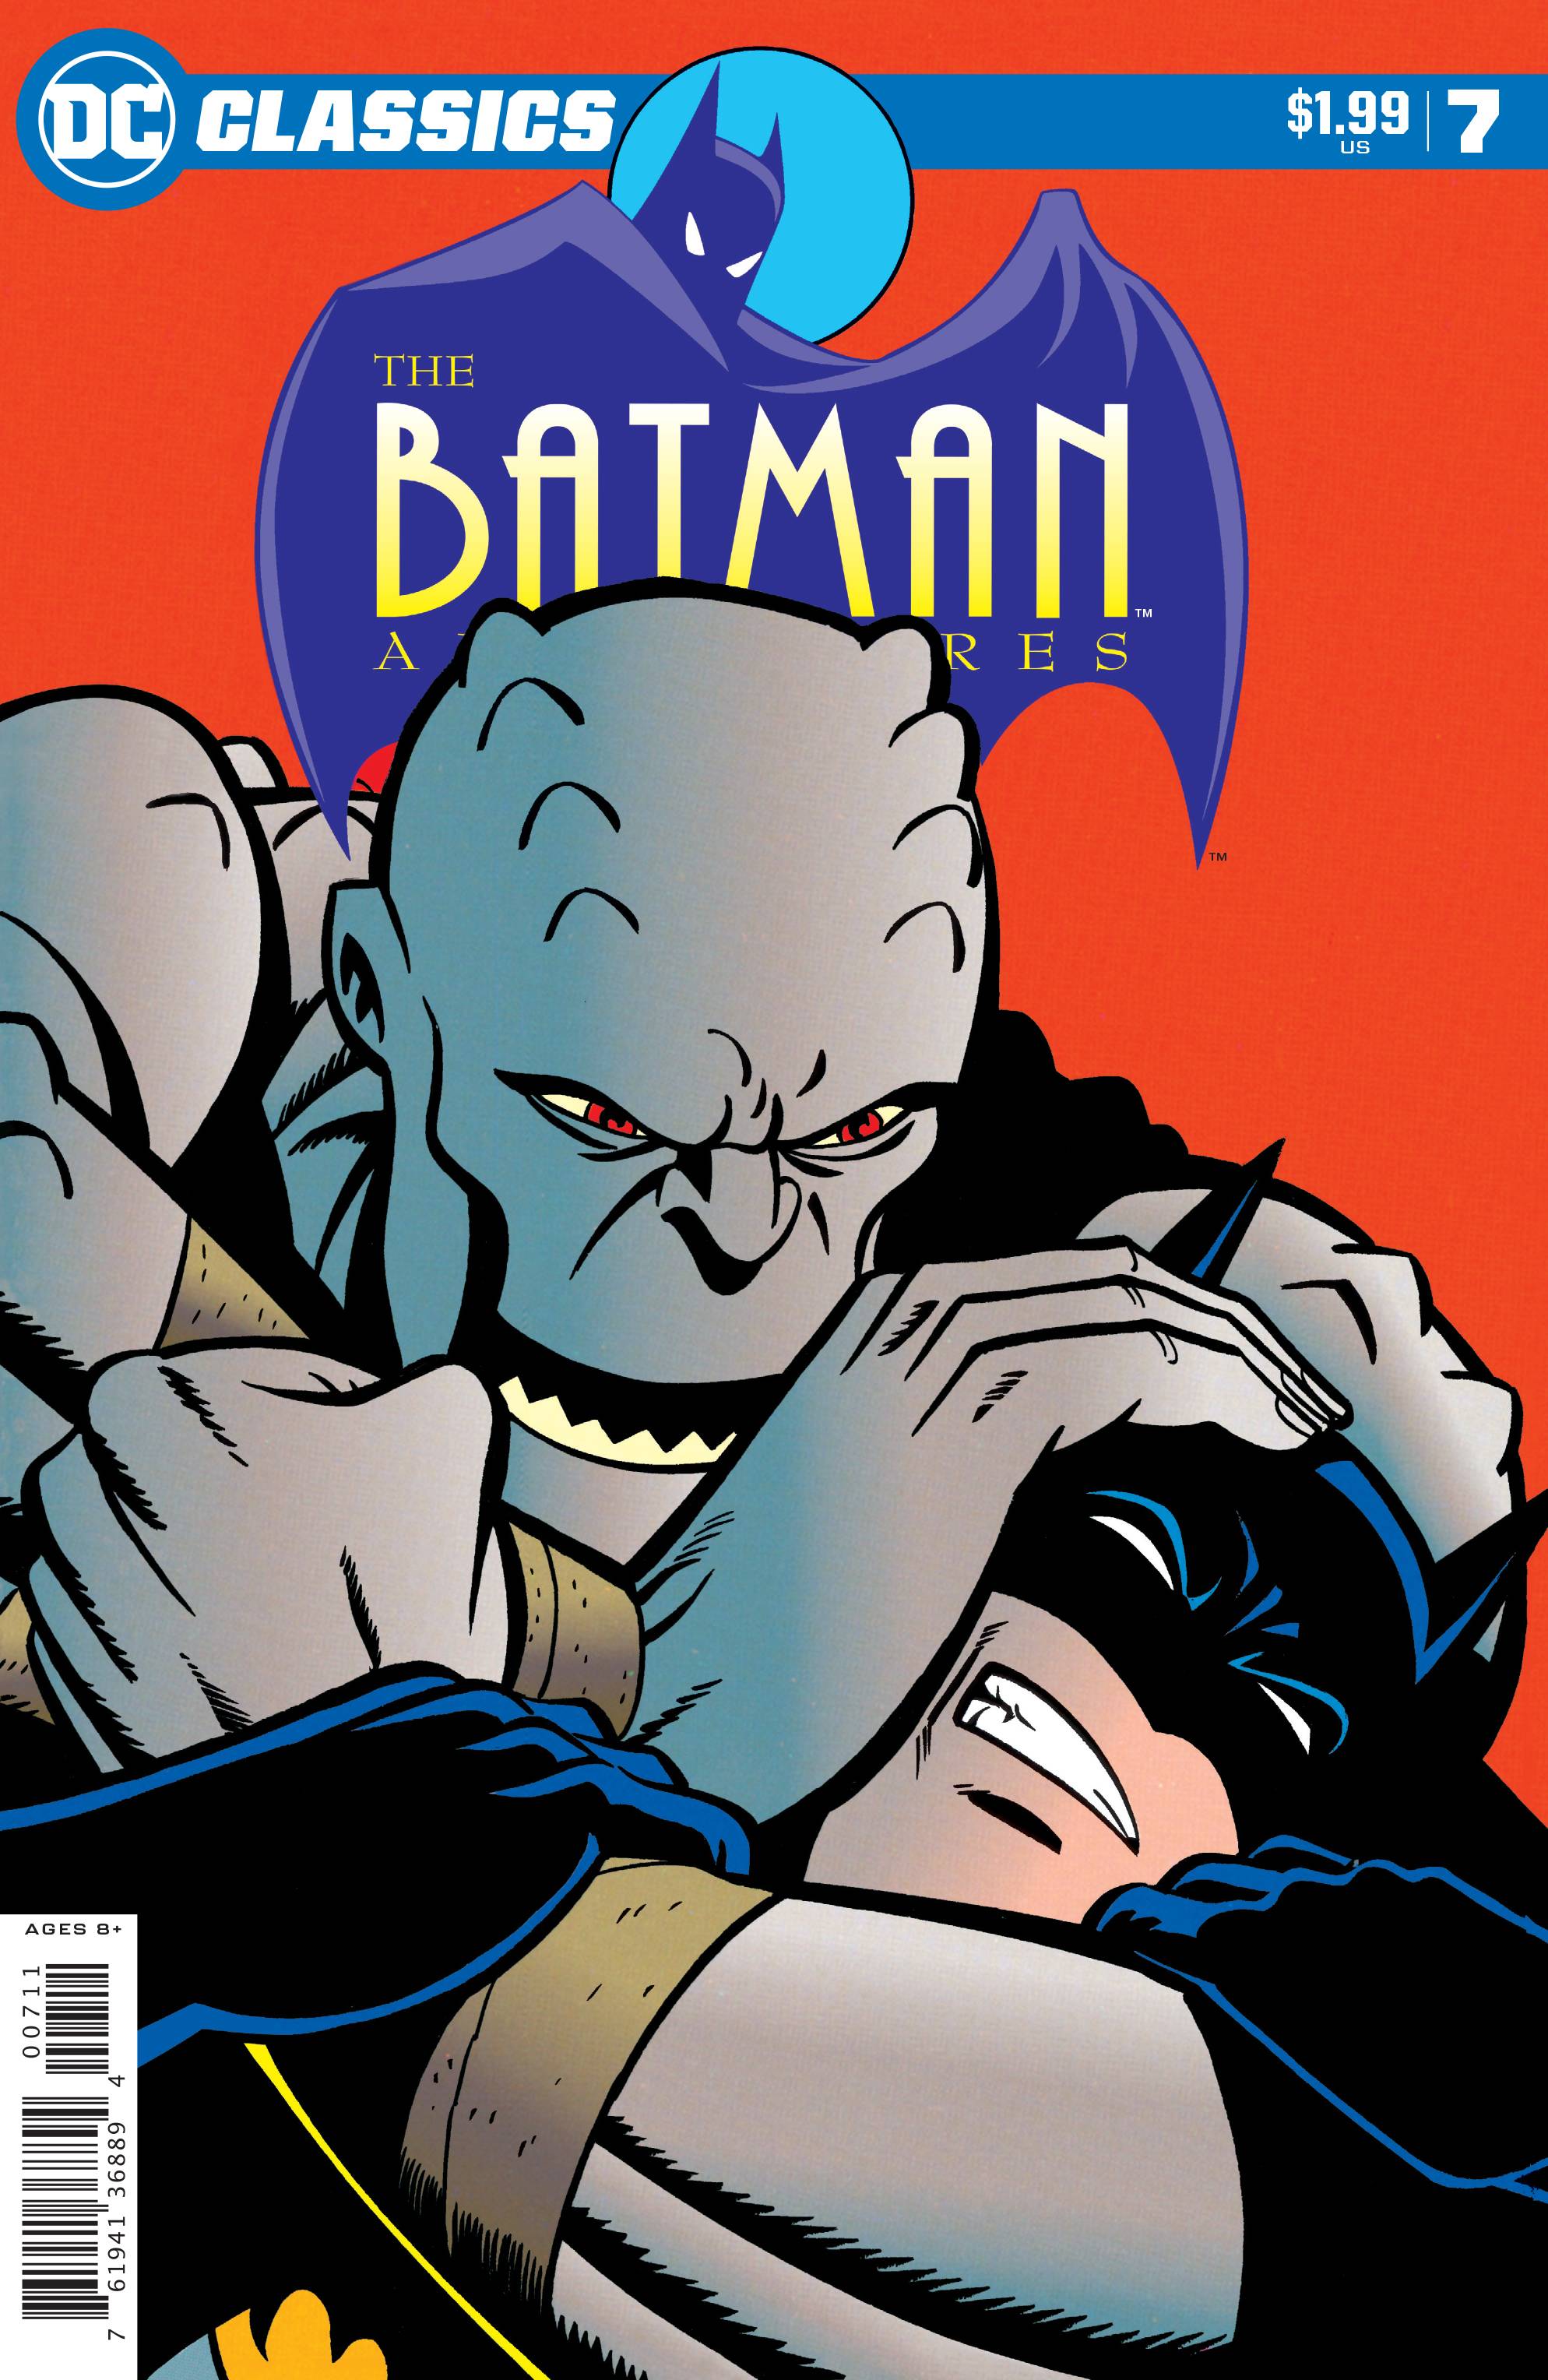 DC CLASSICS THE BATMAN ADVENTURES #7 | Game Master's Emporium (The New GME)